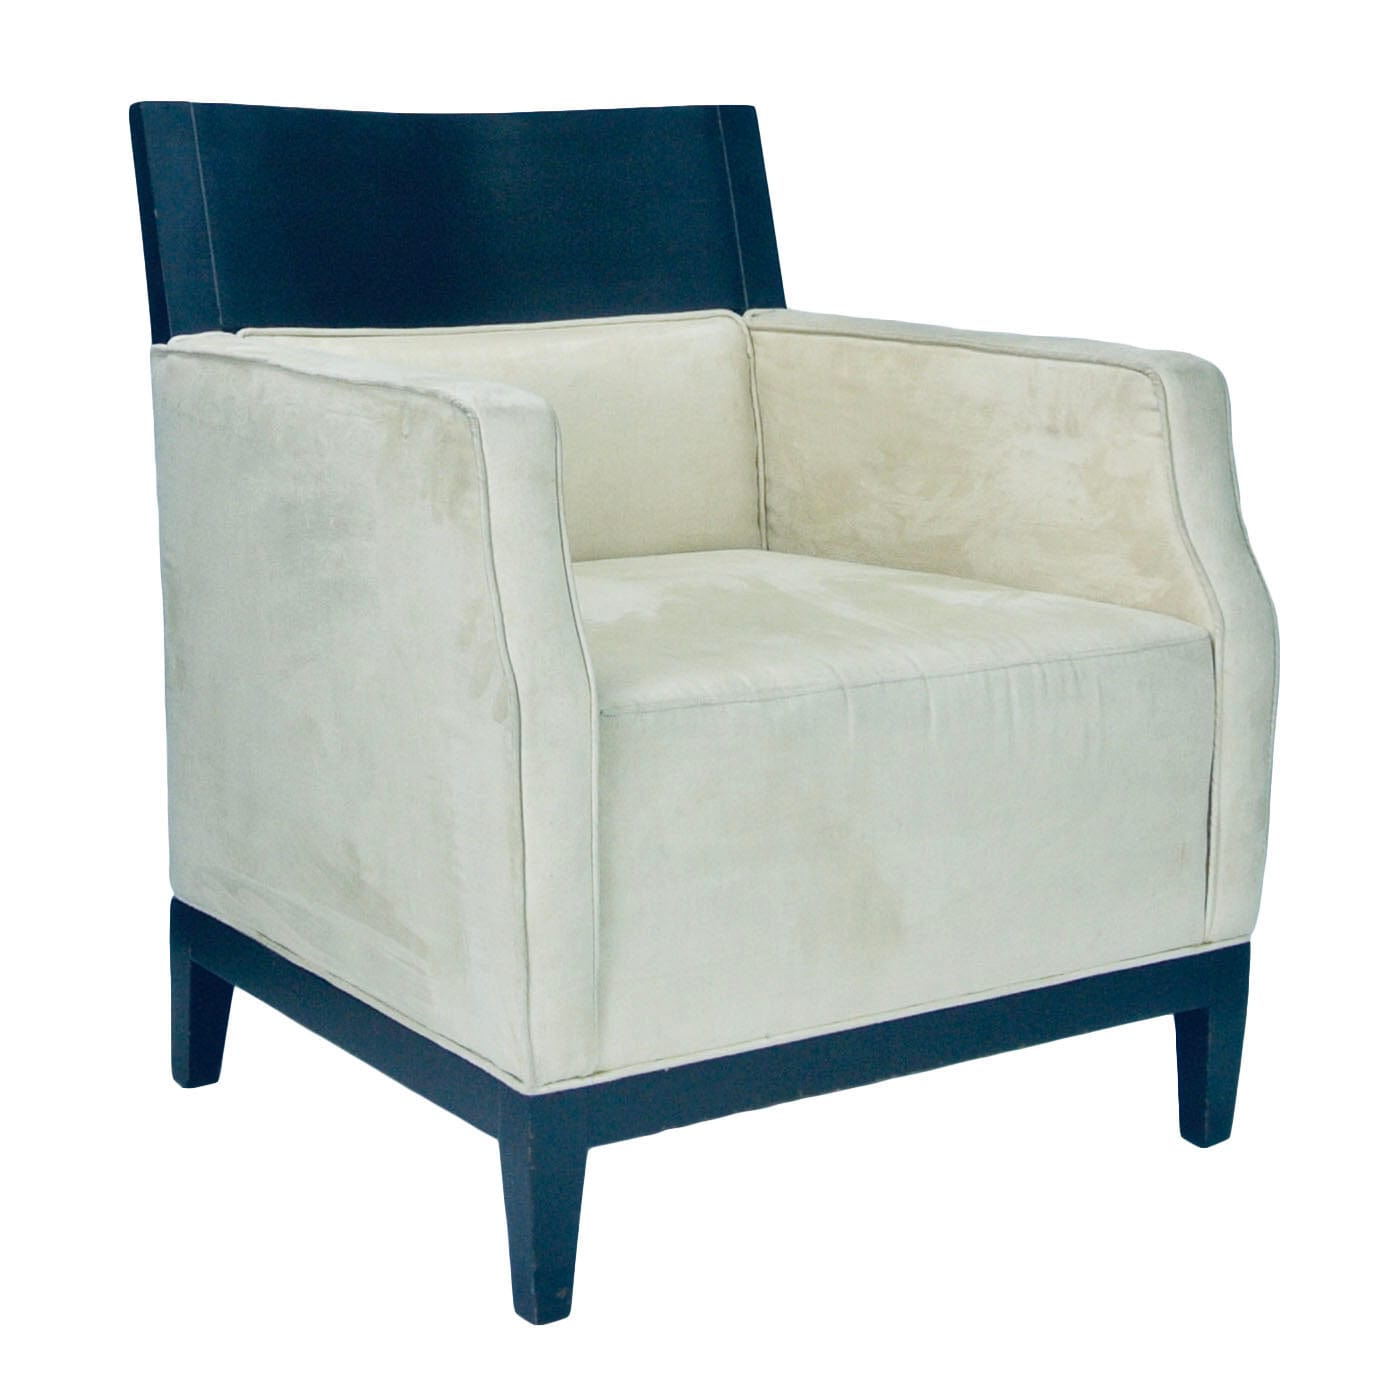 HomeShake Arm Chairs, Recliners & Sleeper Chairs Kingswear Club Chair (Display Model)